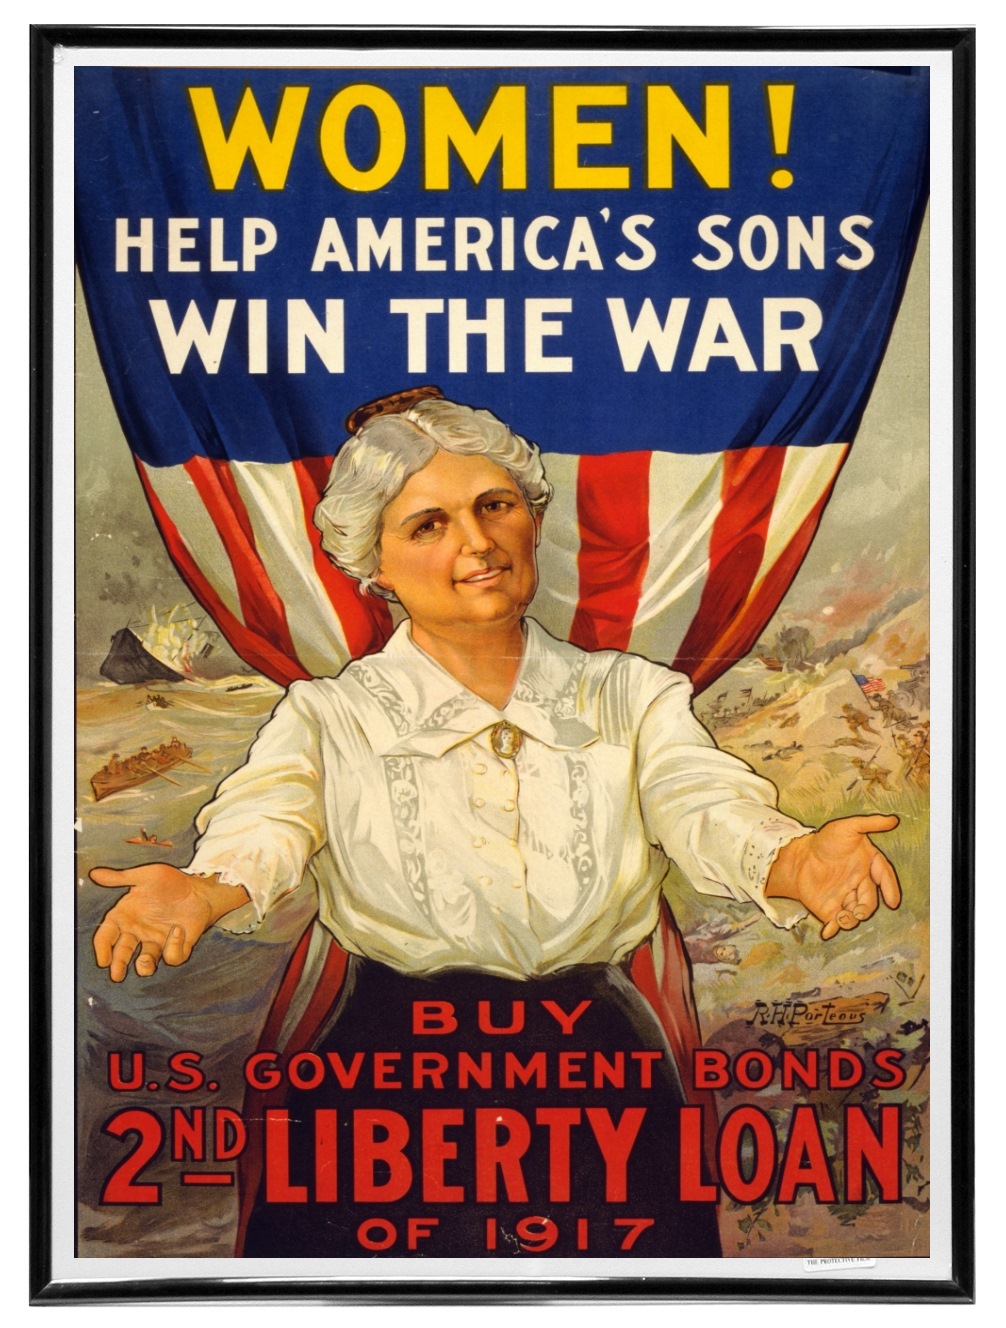 Vintage World War Propaganda Posters (vol.1) - RetroGraphik